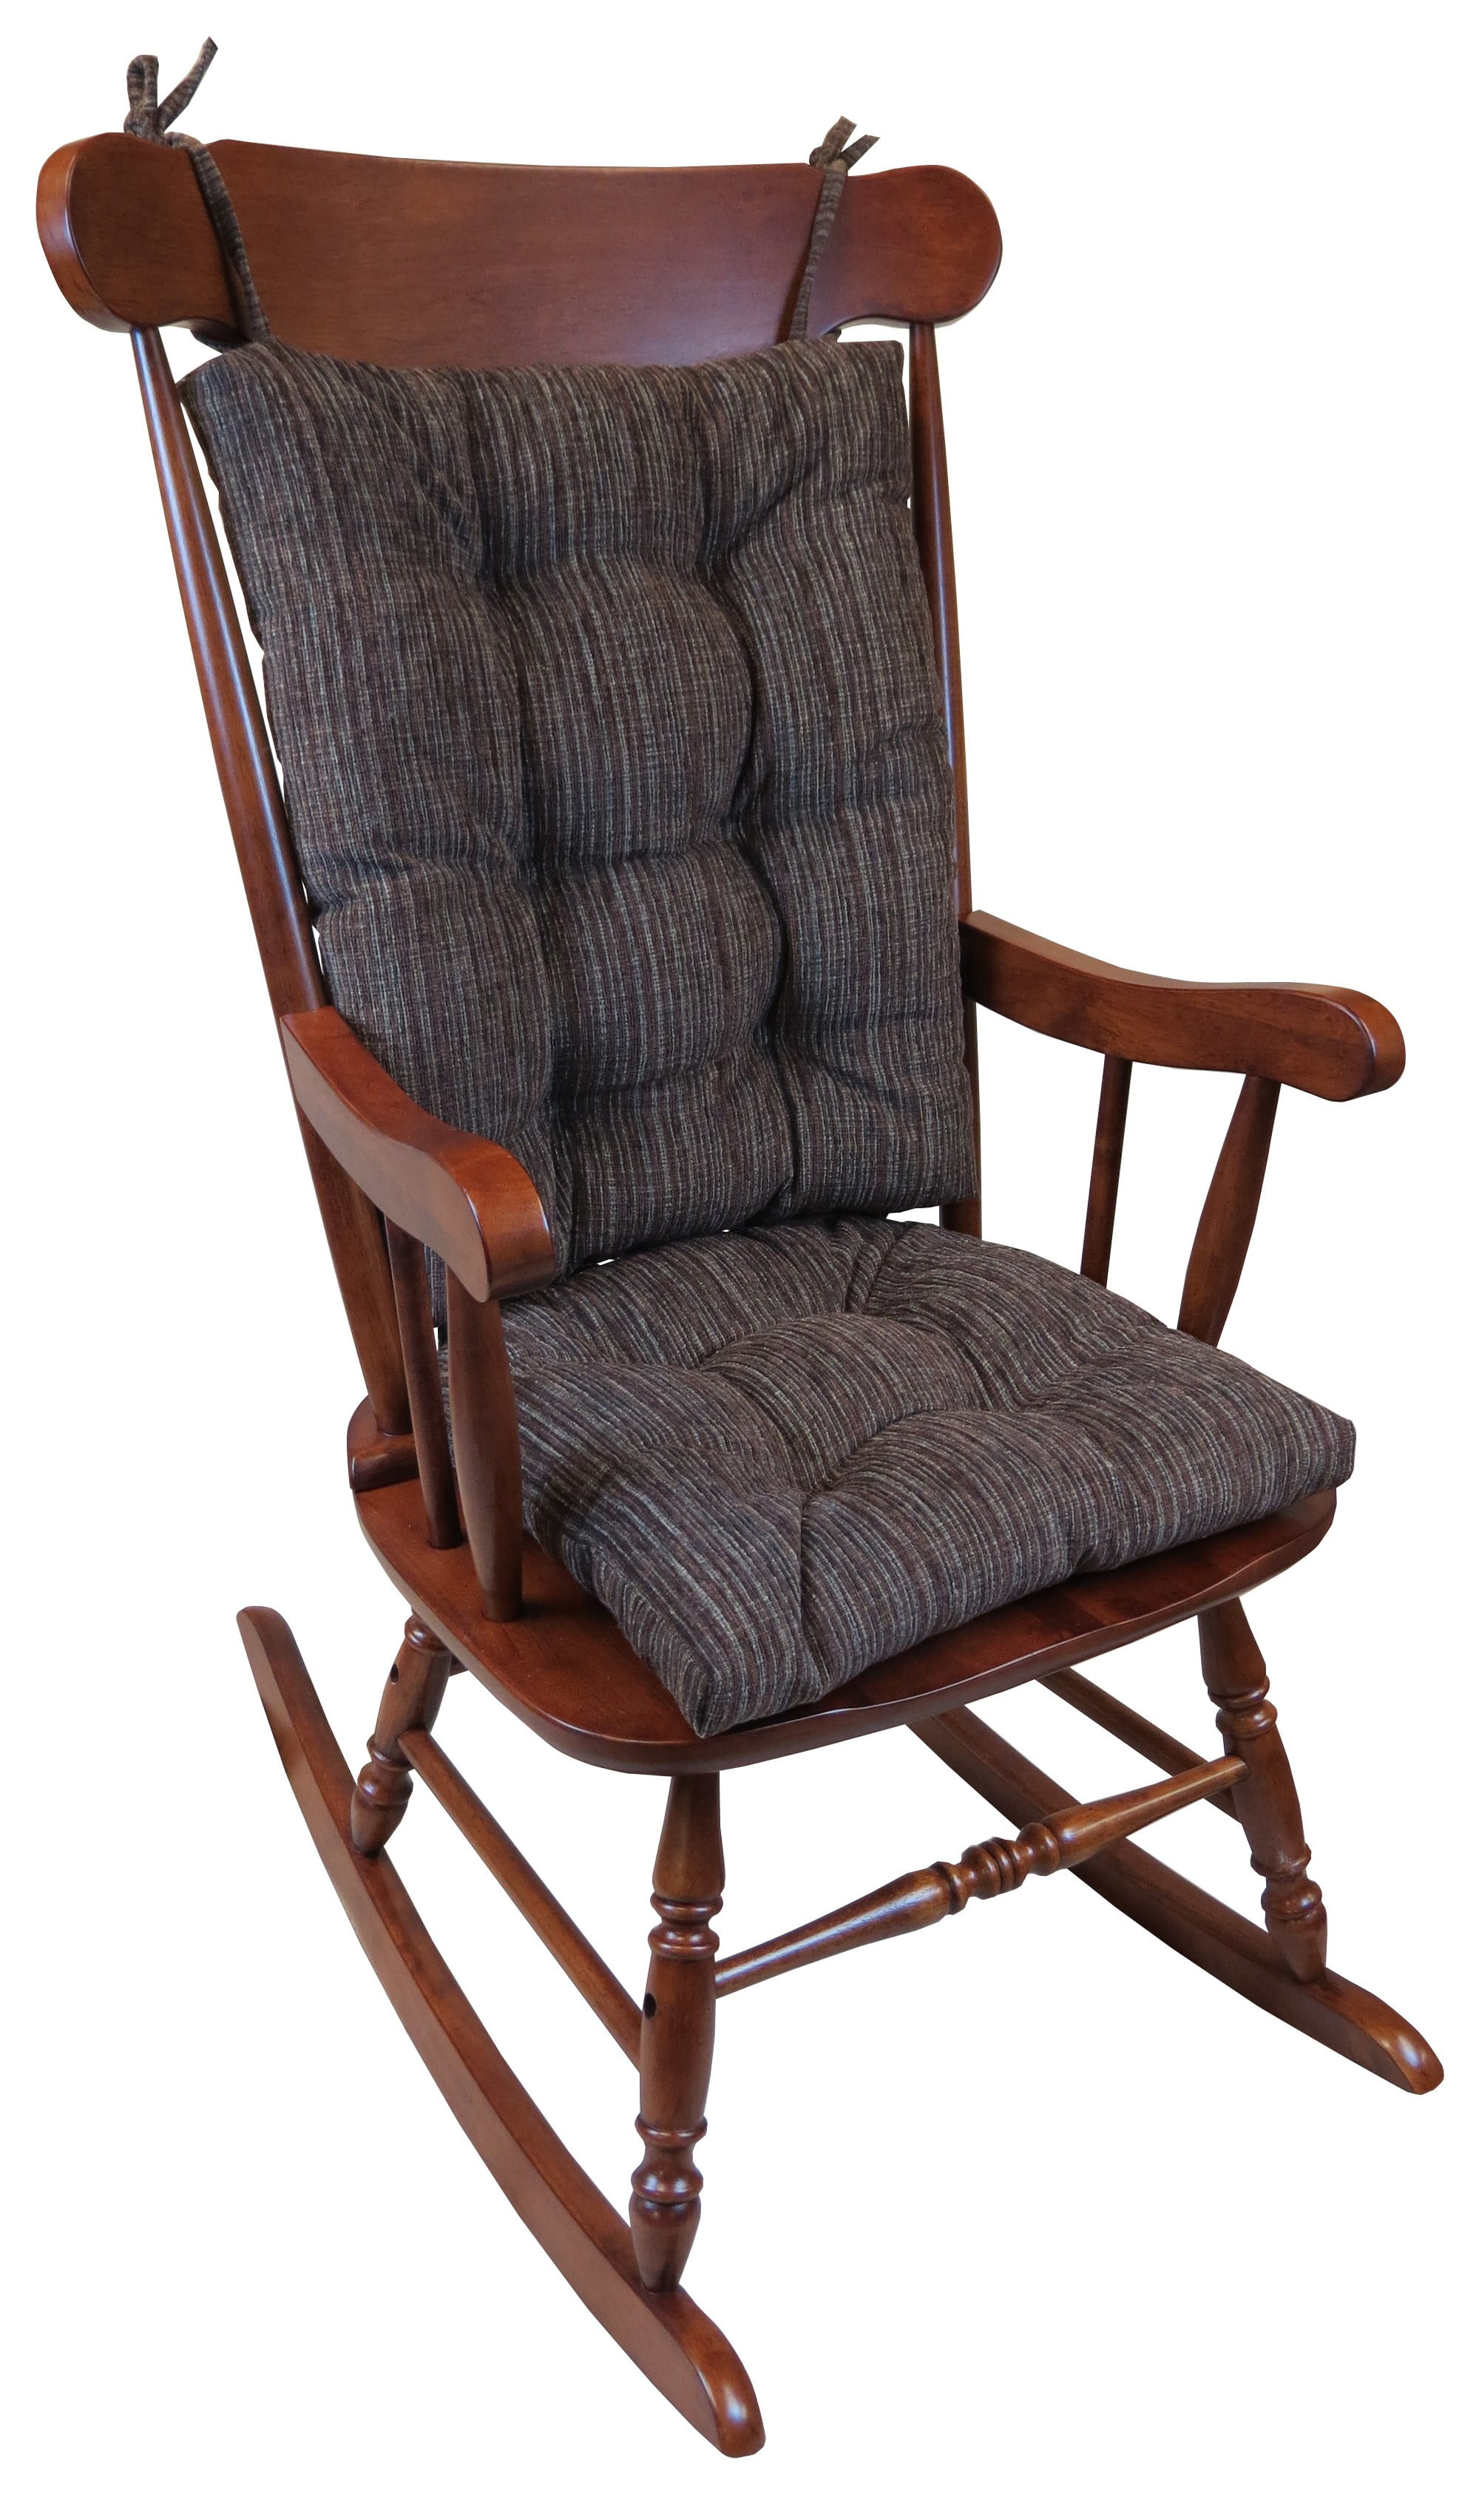 XL Rocking Chair Cushion Set with Gripper Bottom - Cracker Barrel